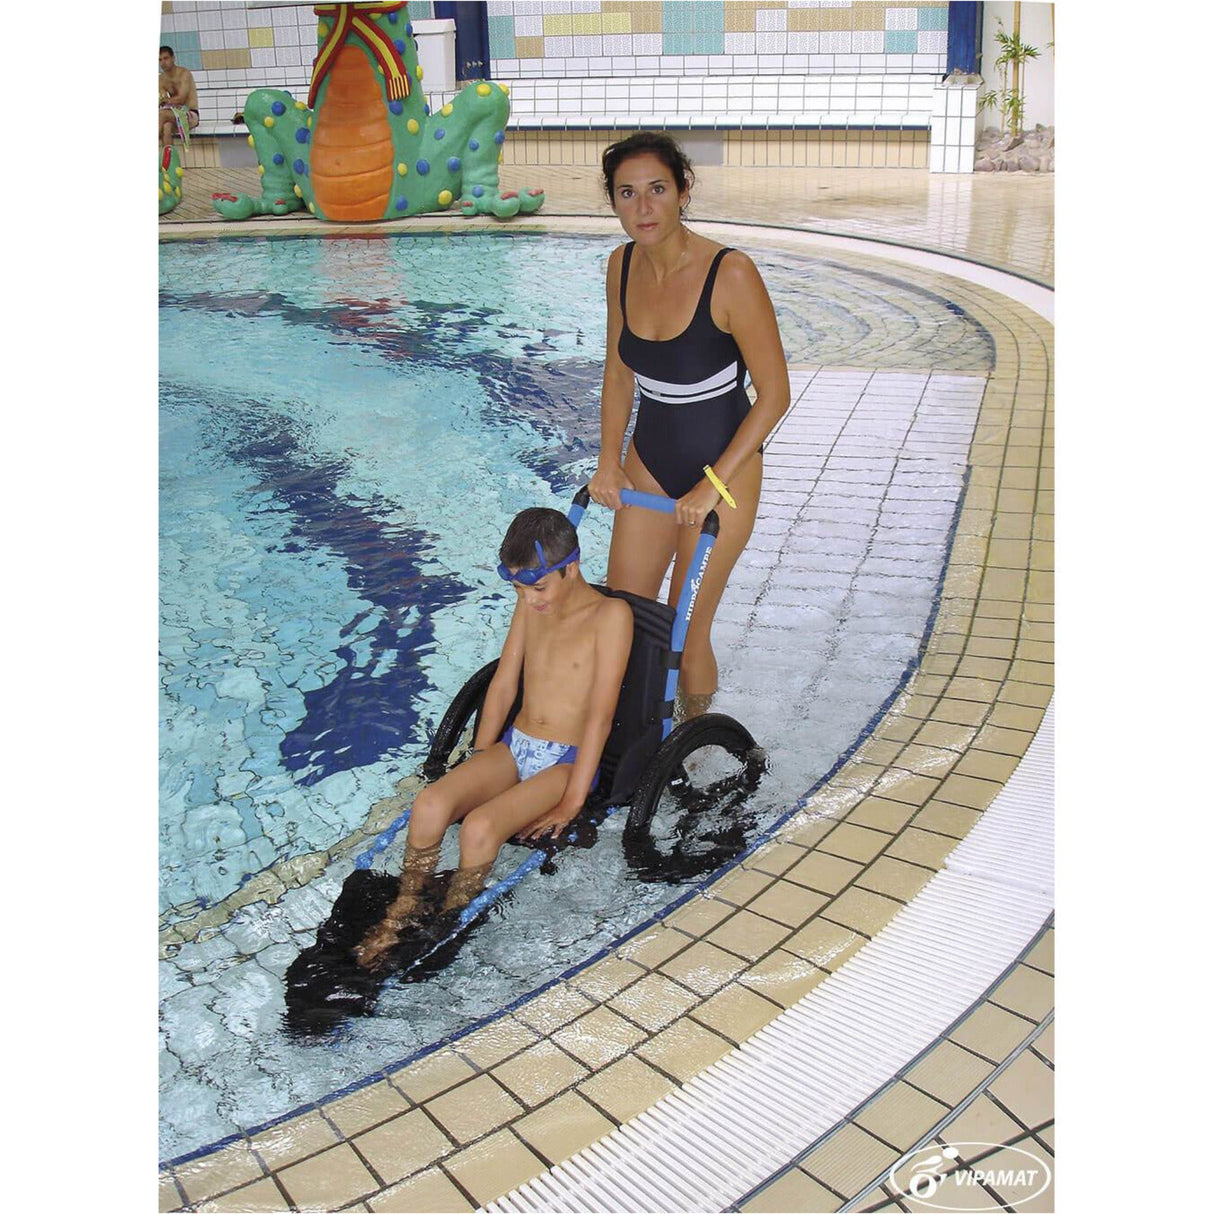 VipaMat Hippocampe Swimming Pool Wheelchair